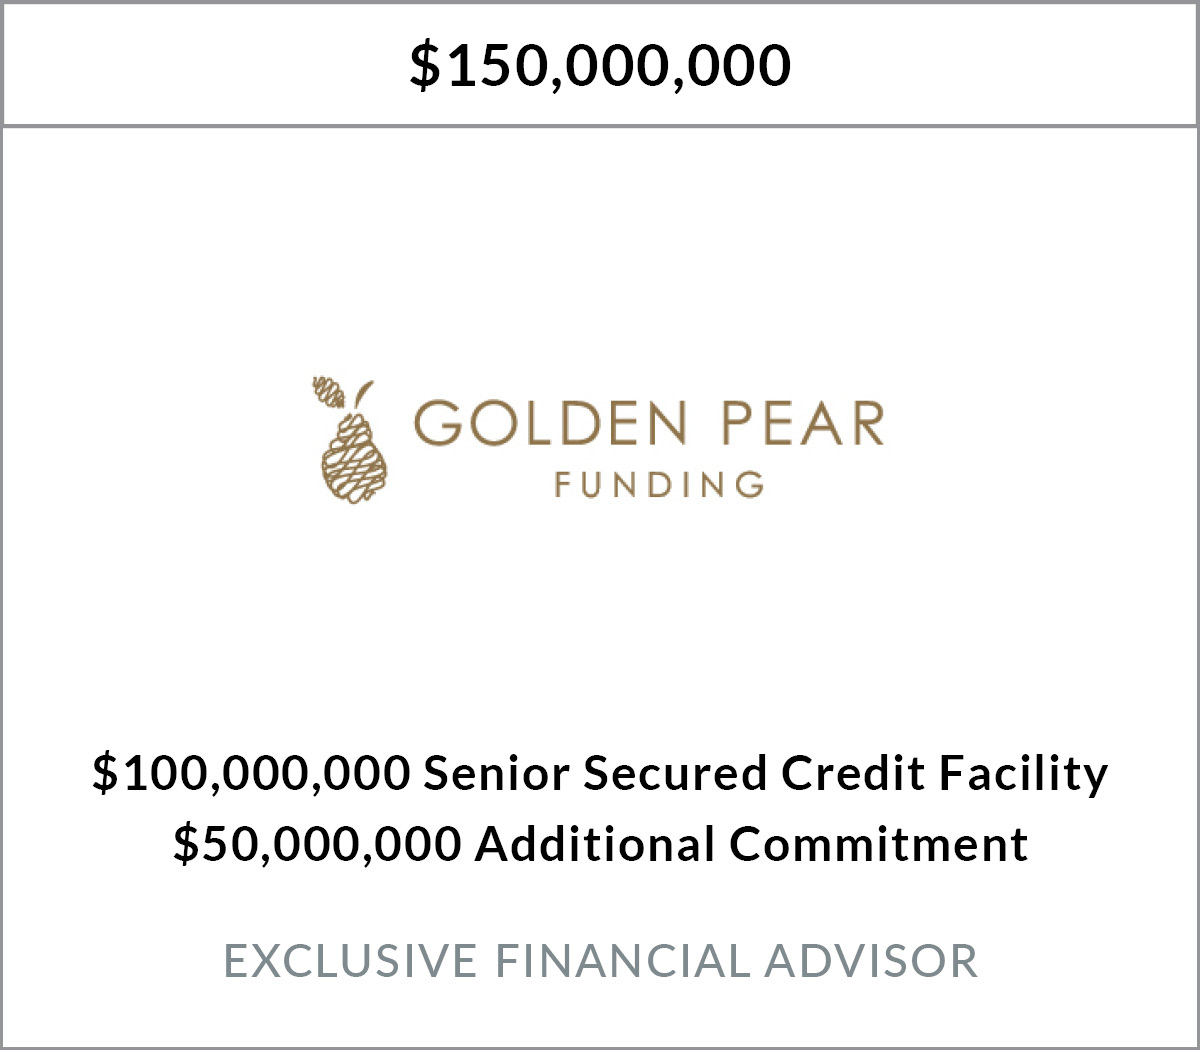 Bryant Park Capital arranges $150 million senior secured credit facility for leading pre-settlement funding company